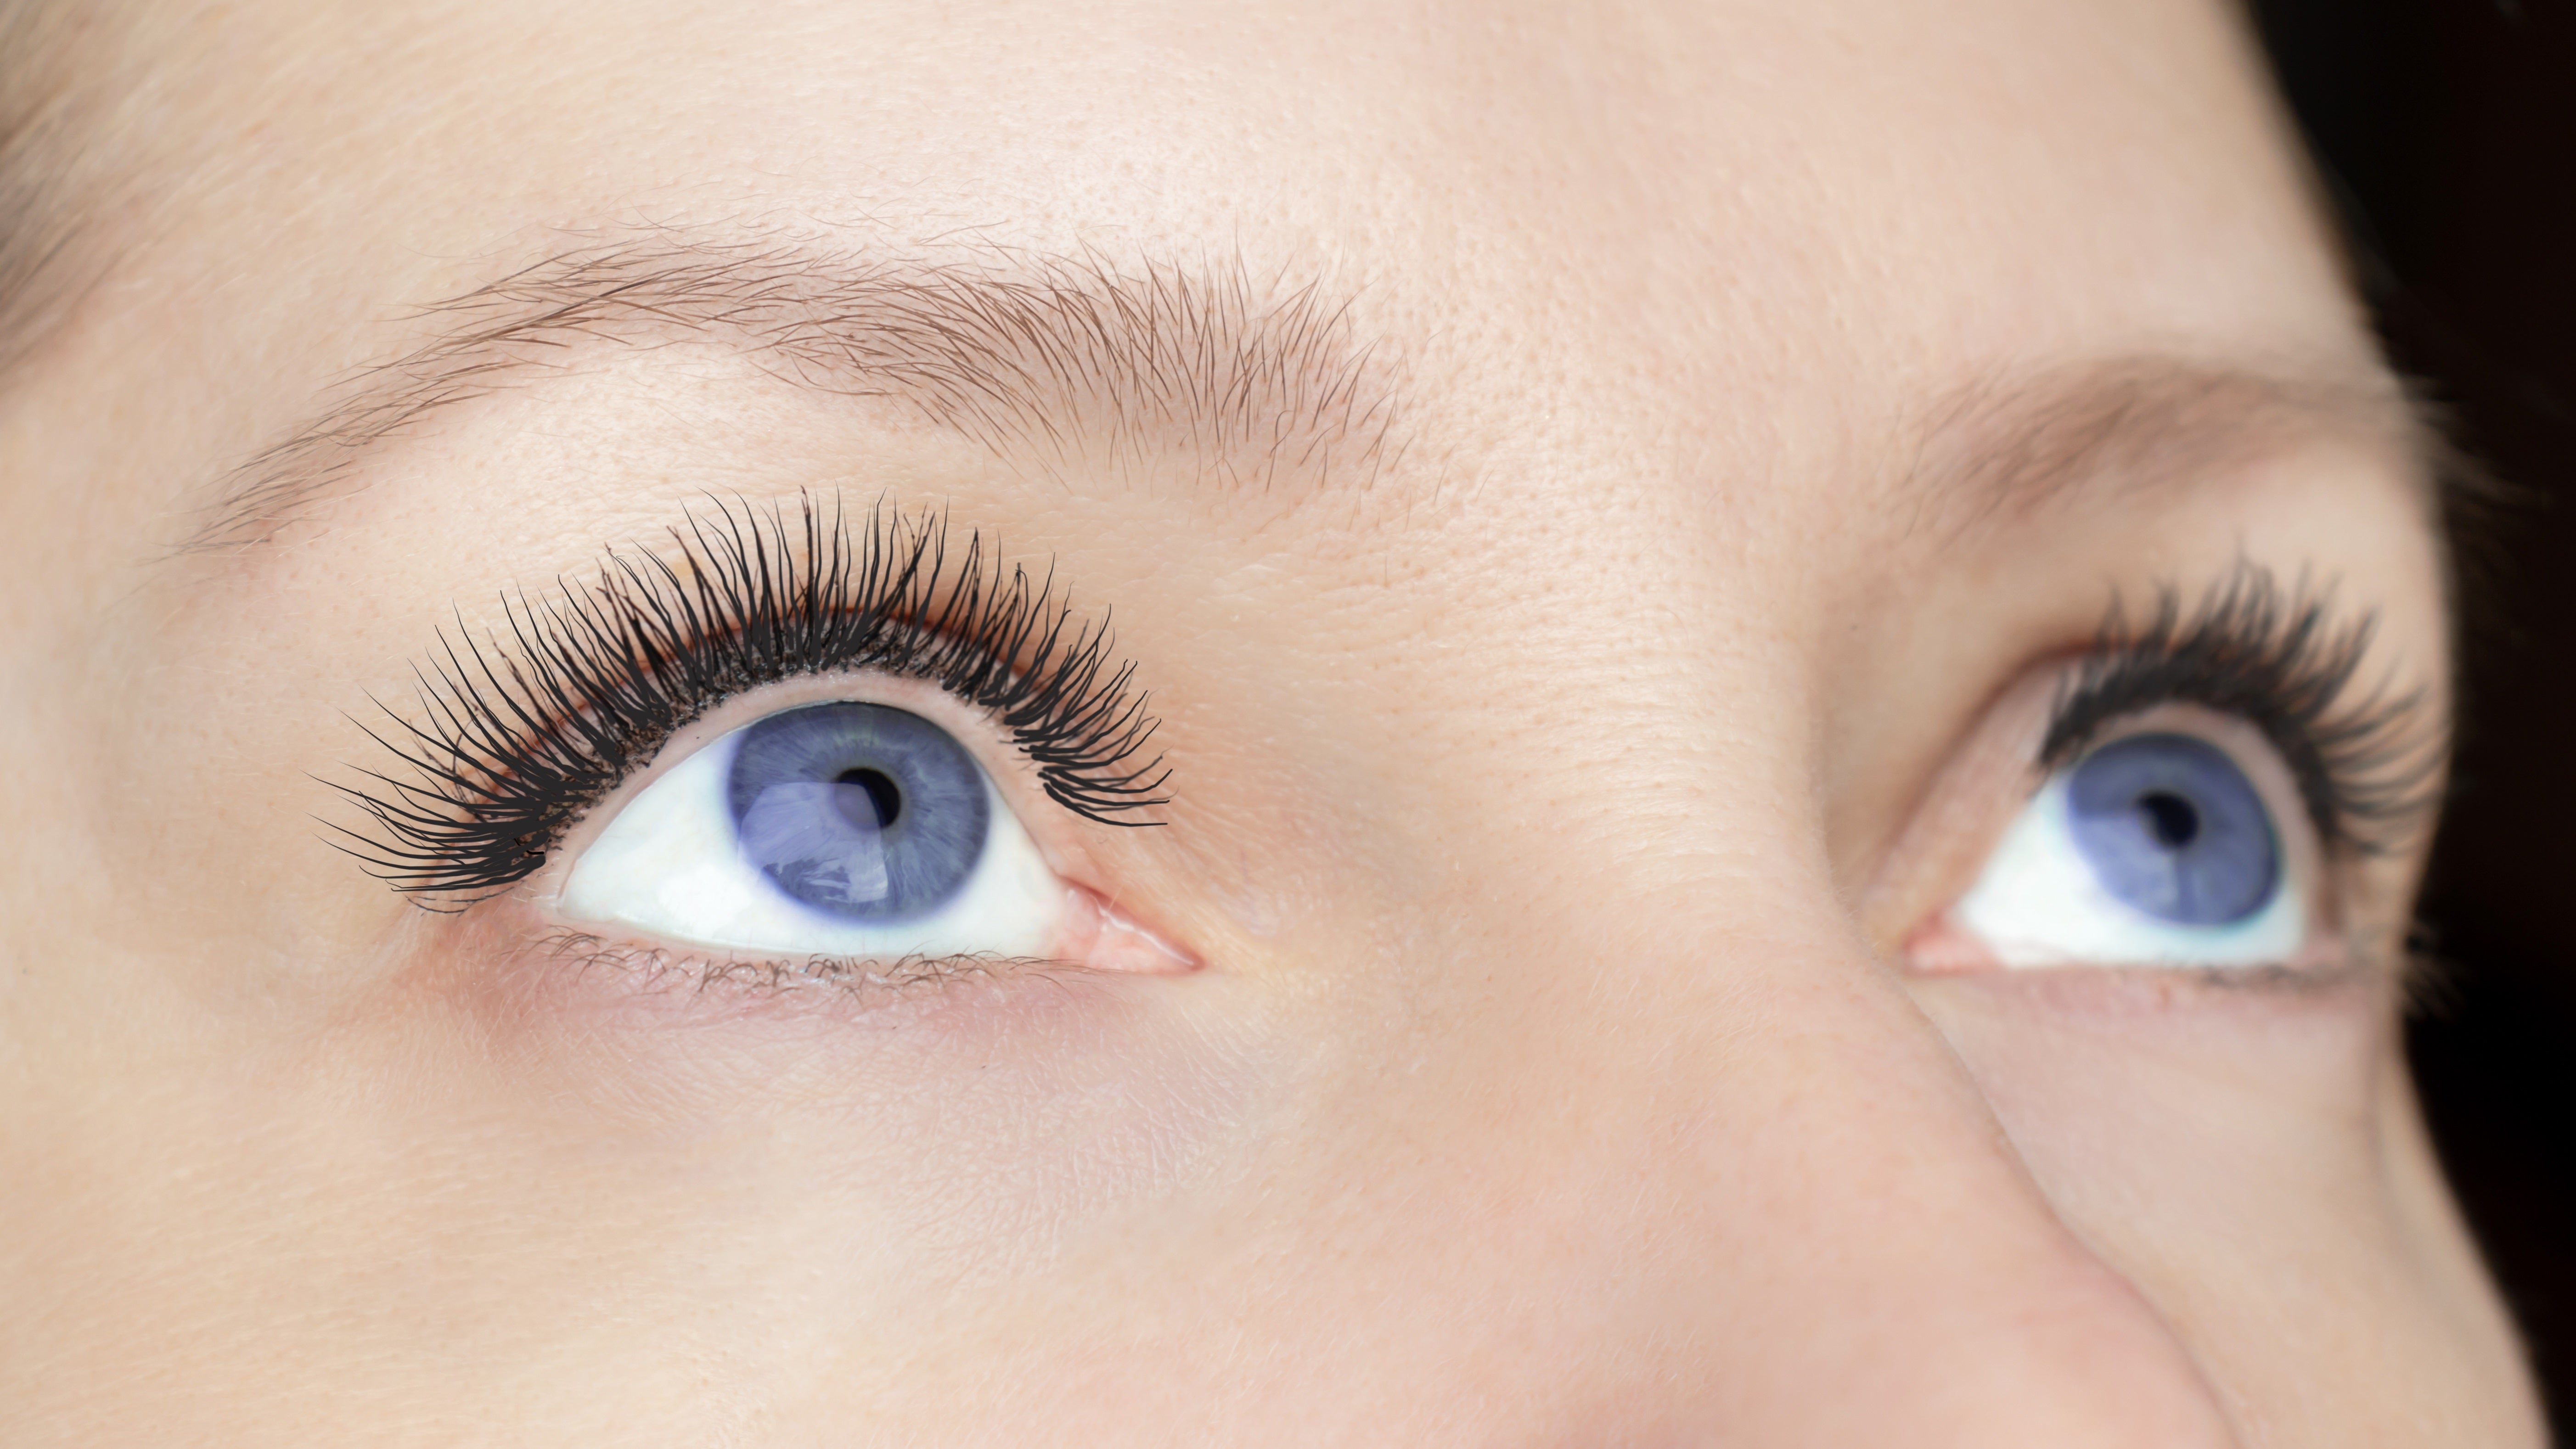 Eye Opener Package - Upneeq, Grolash, and A E Skin Green Tea Essentials Enlightening Eye Cream